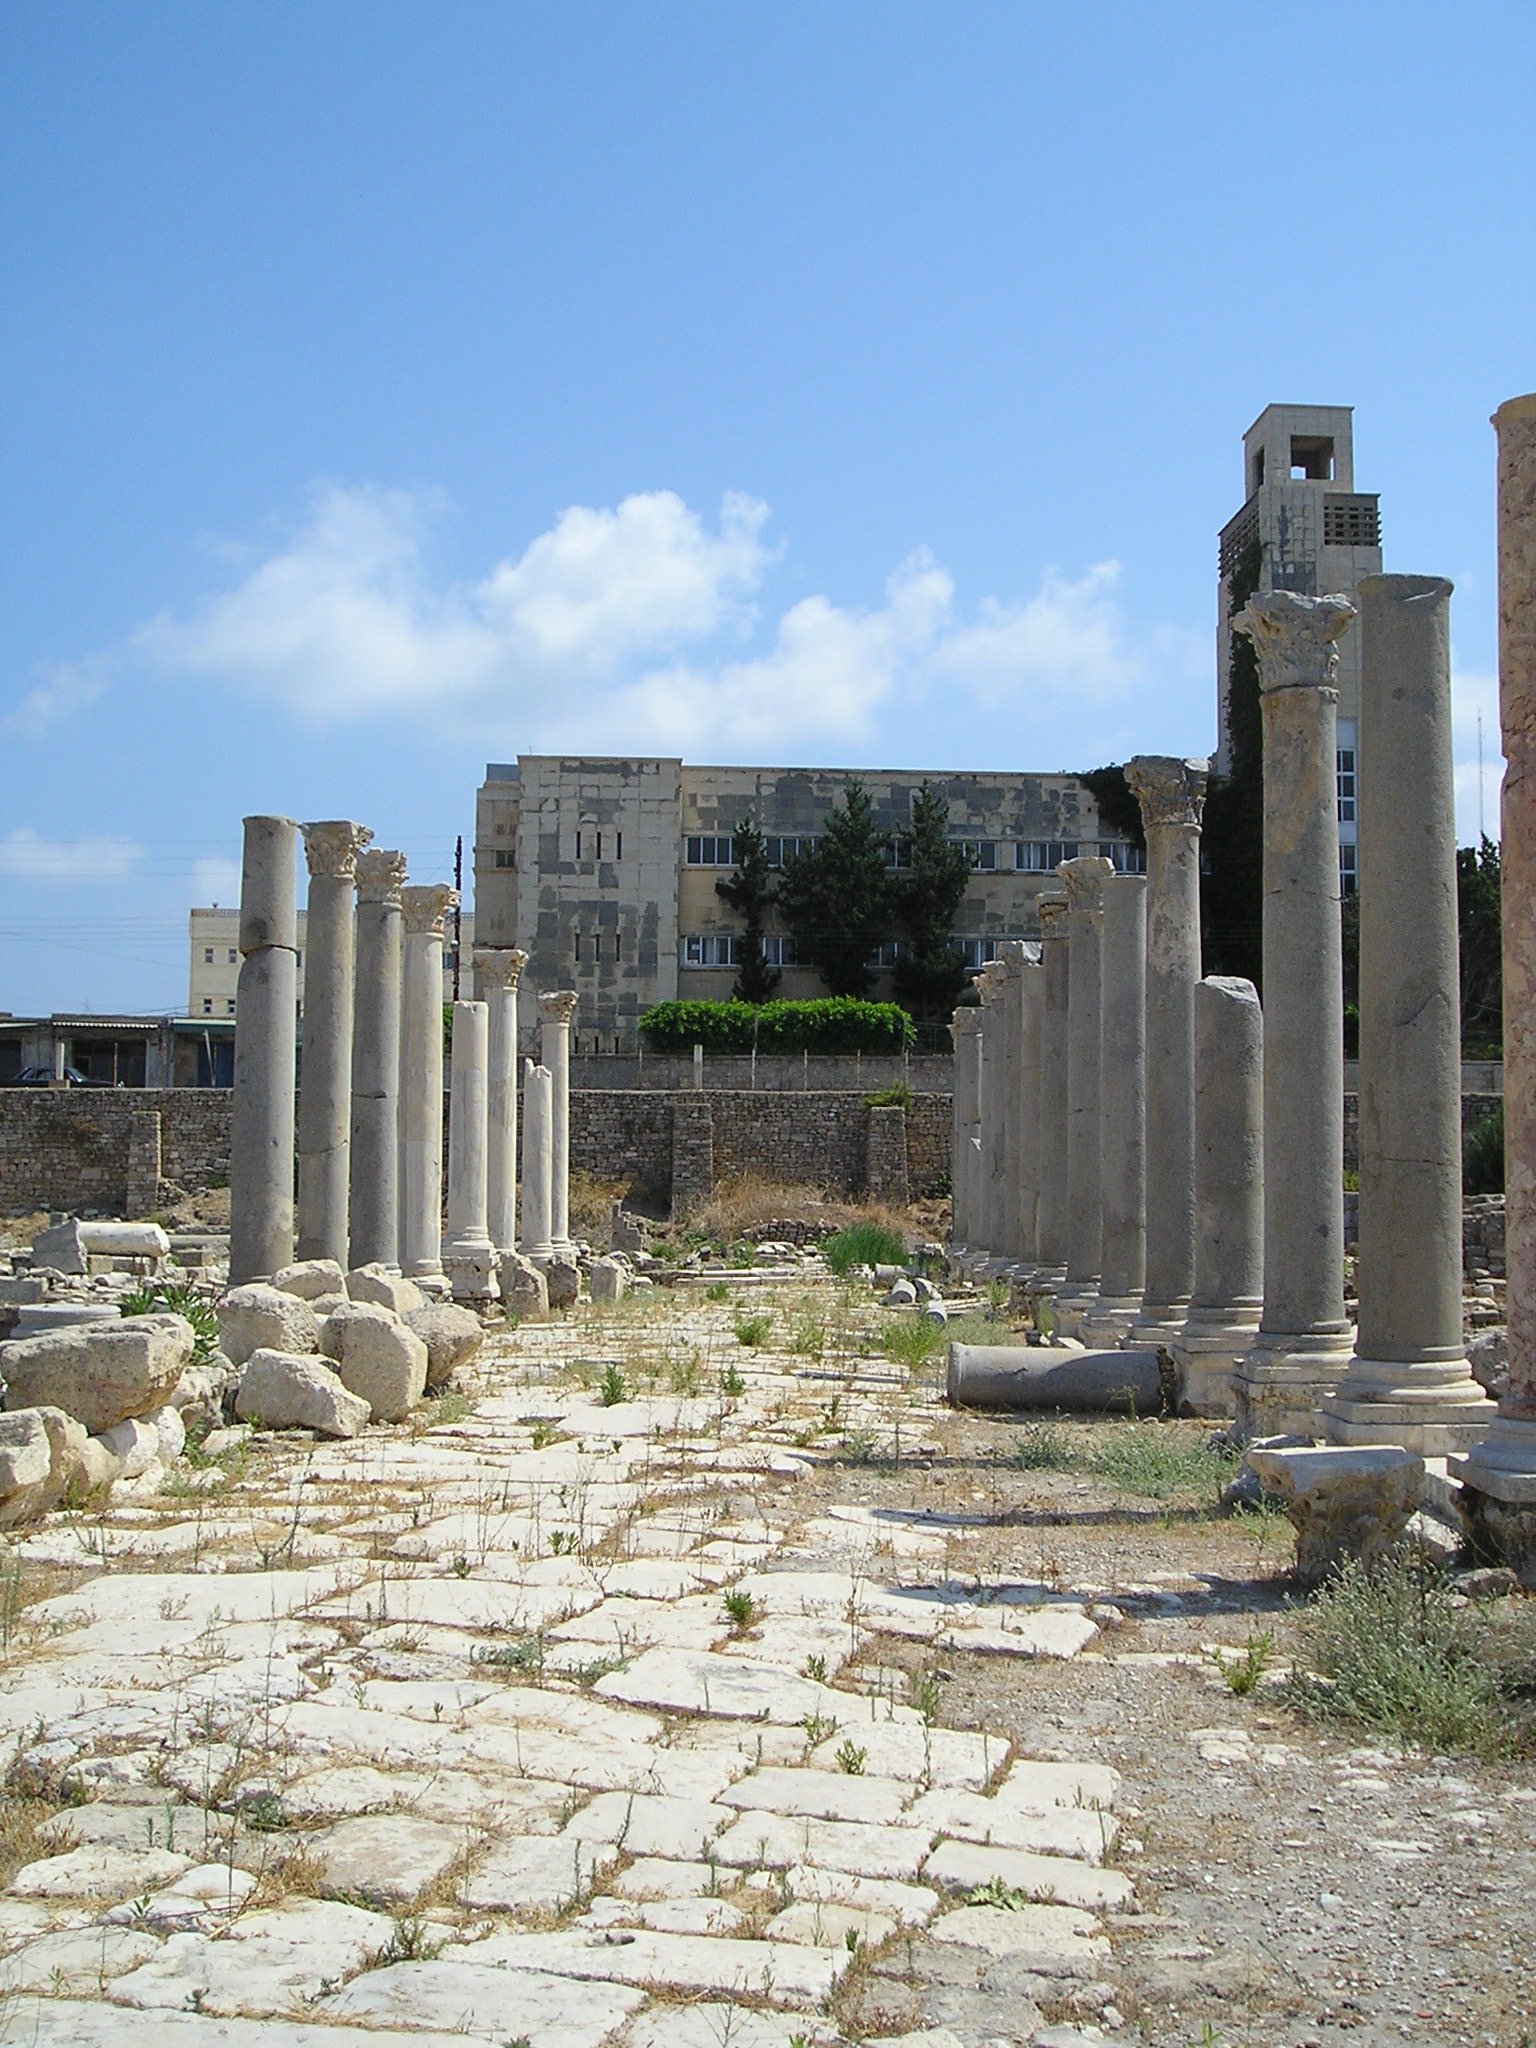 The Athens Agora